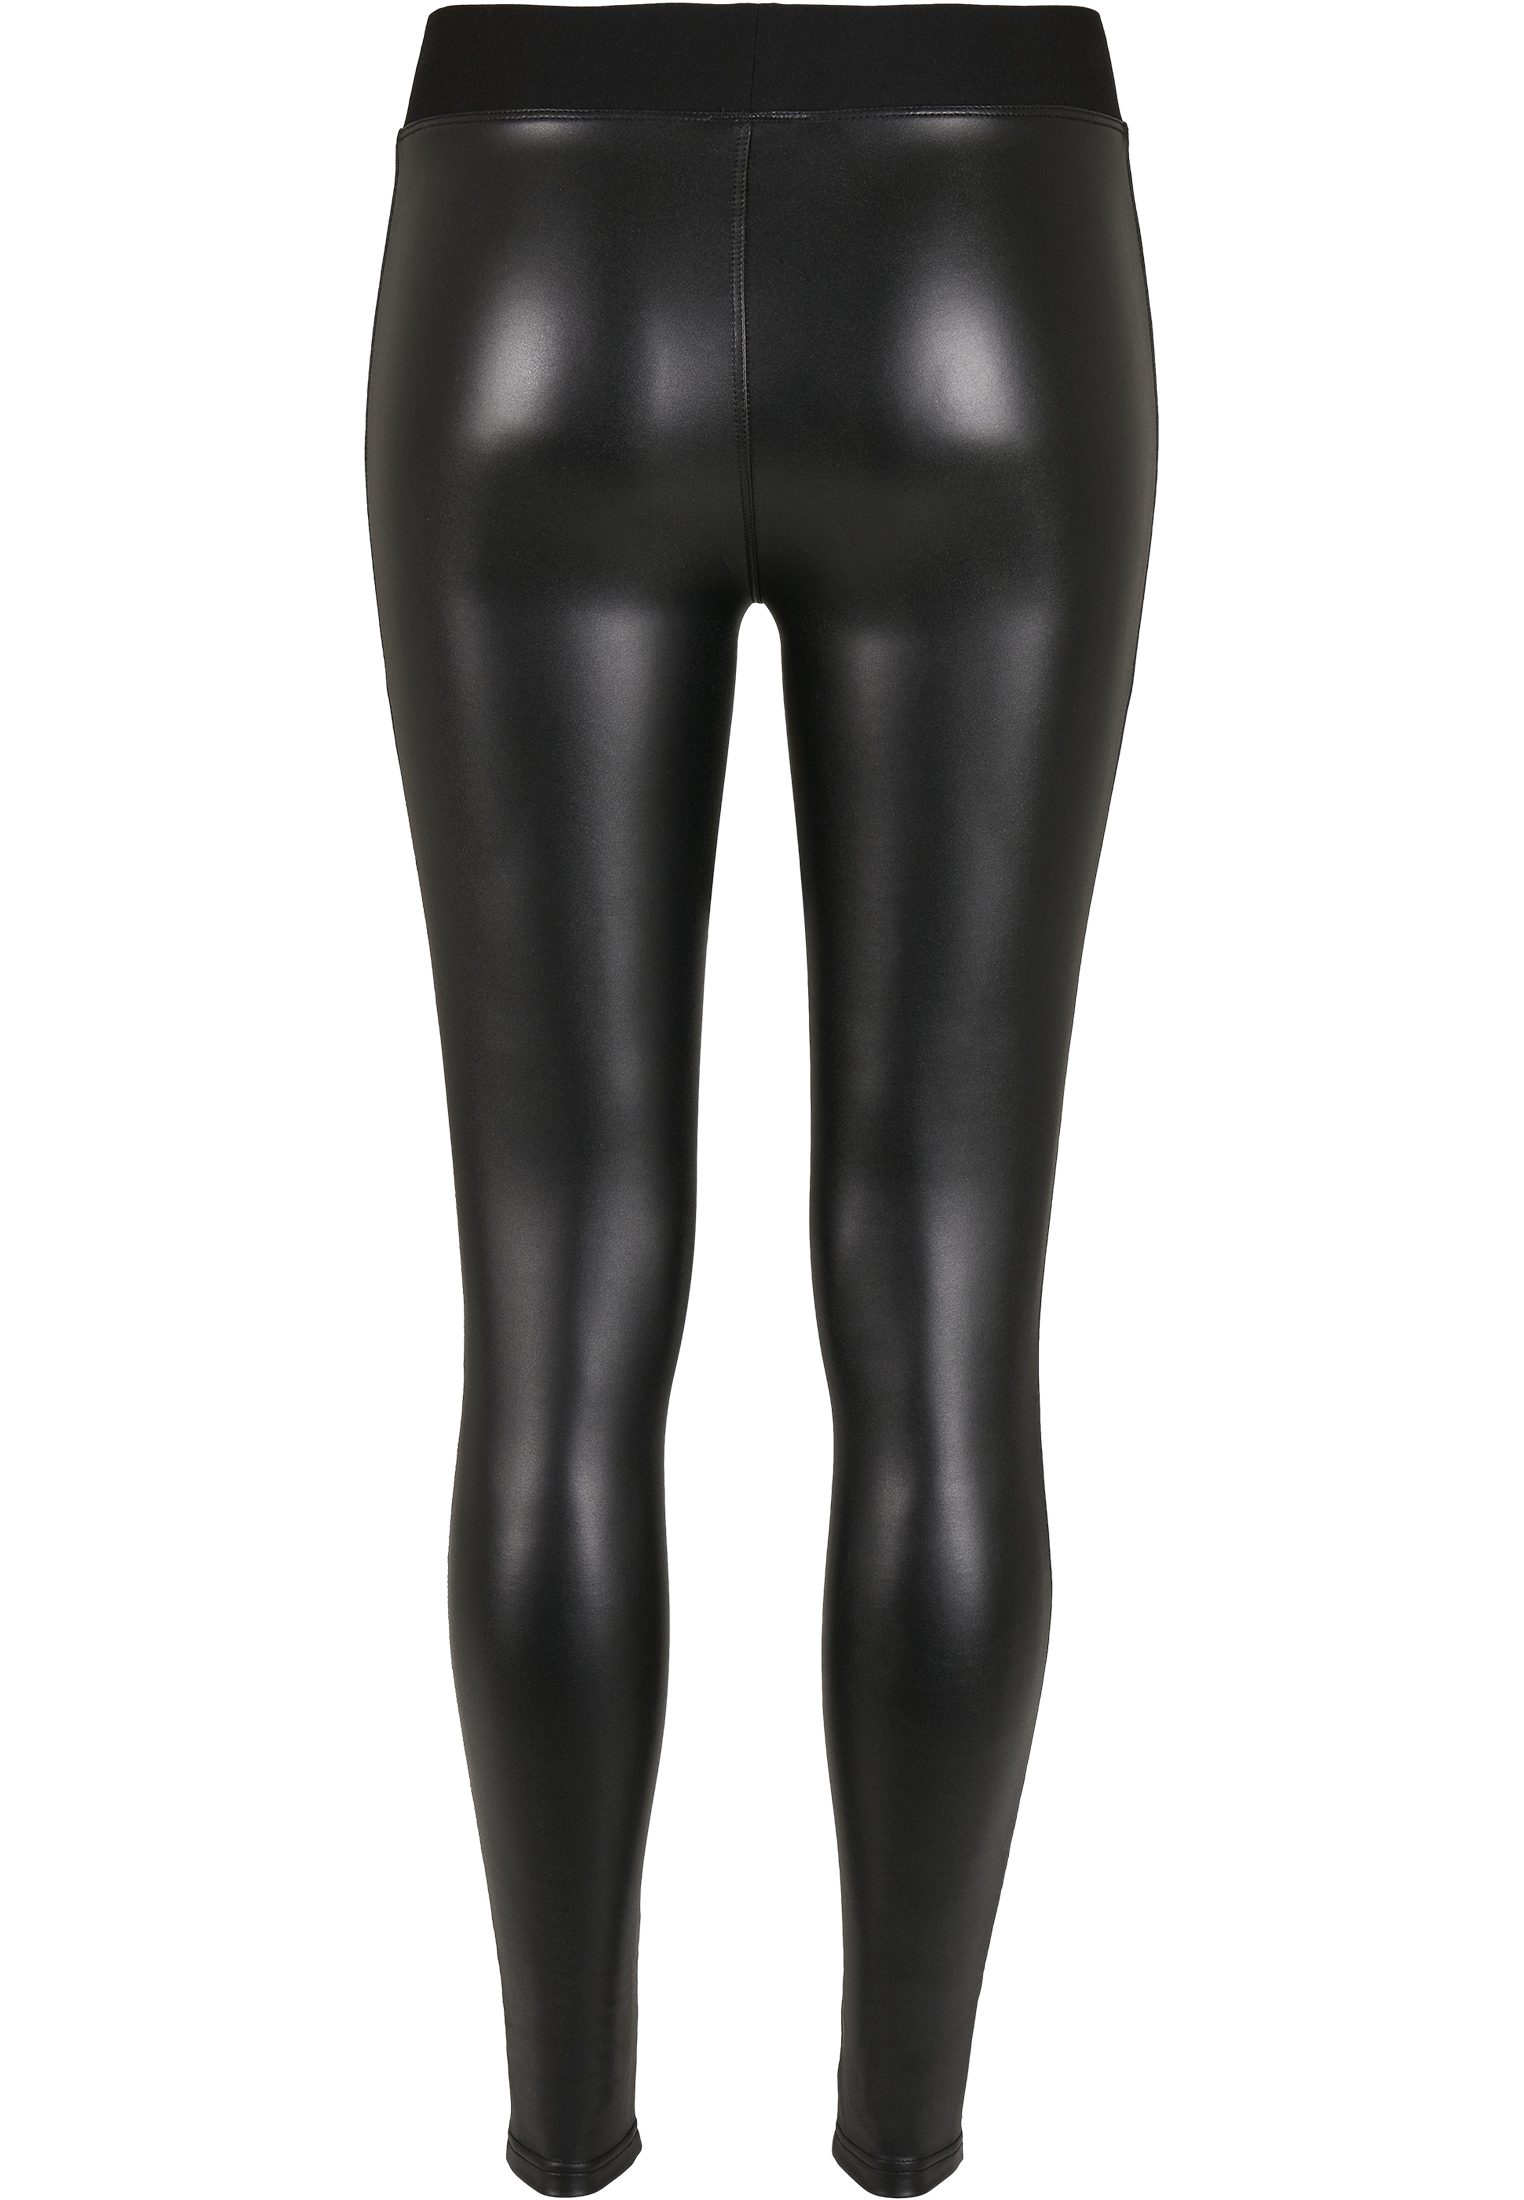 Curvy Ladies Tech Mesh Faux Leather Leggings in Farbe black